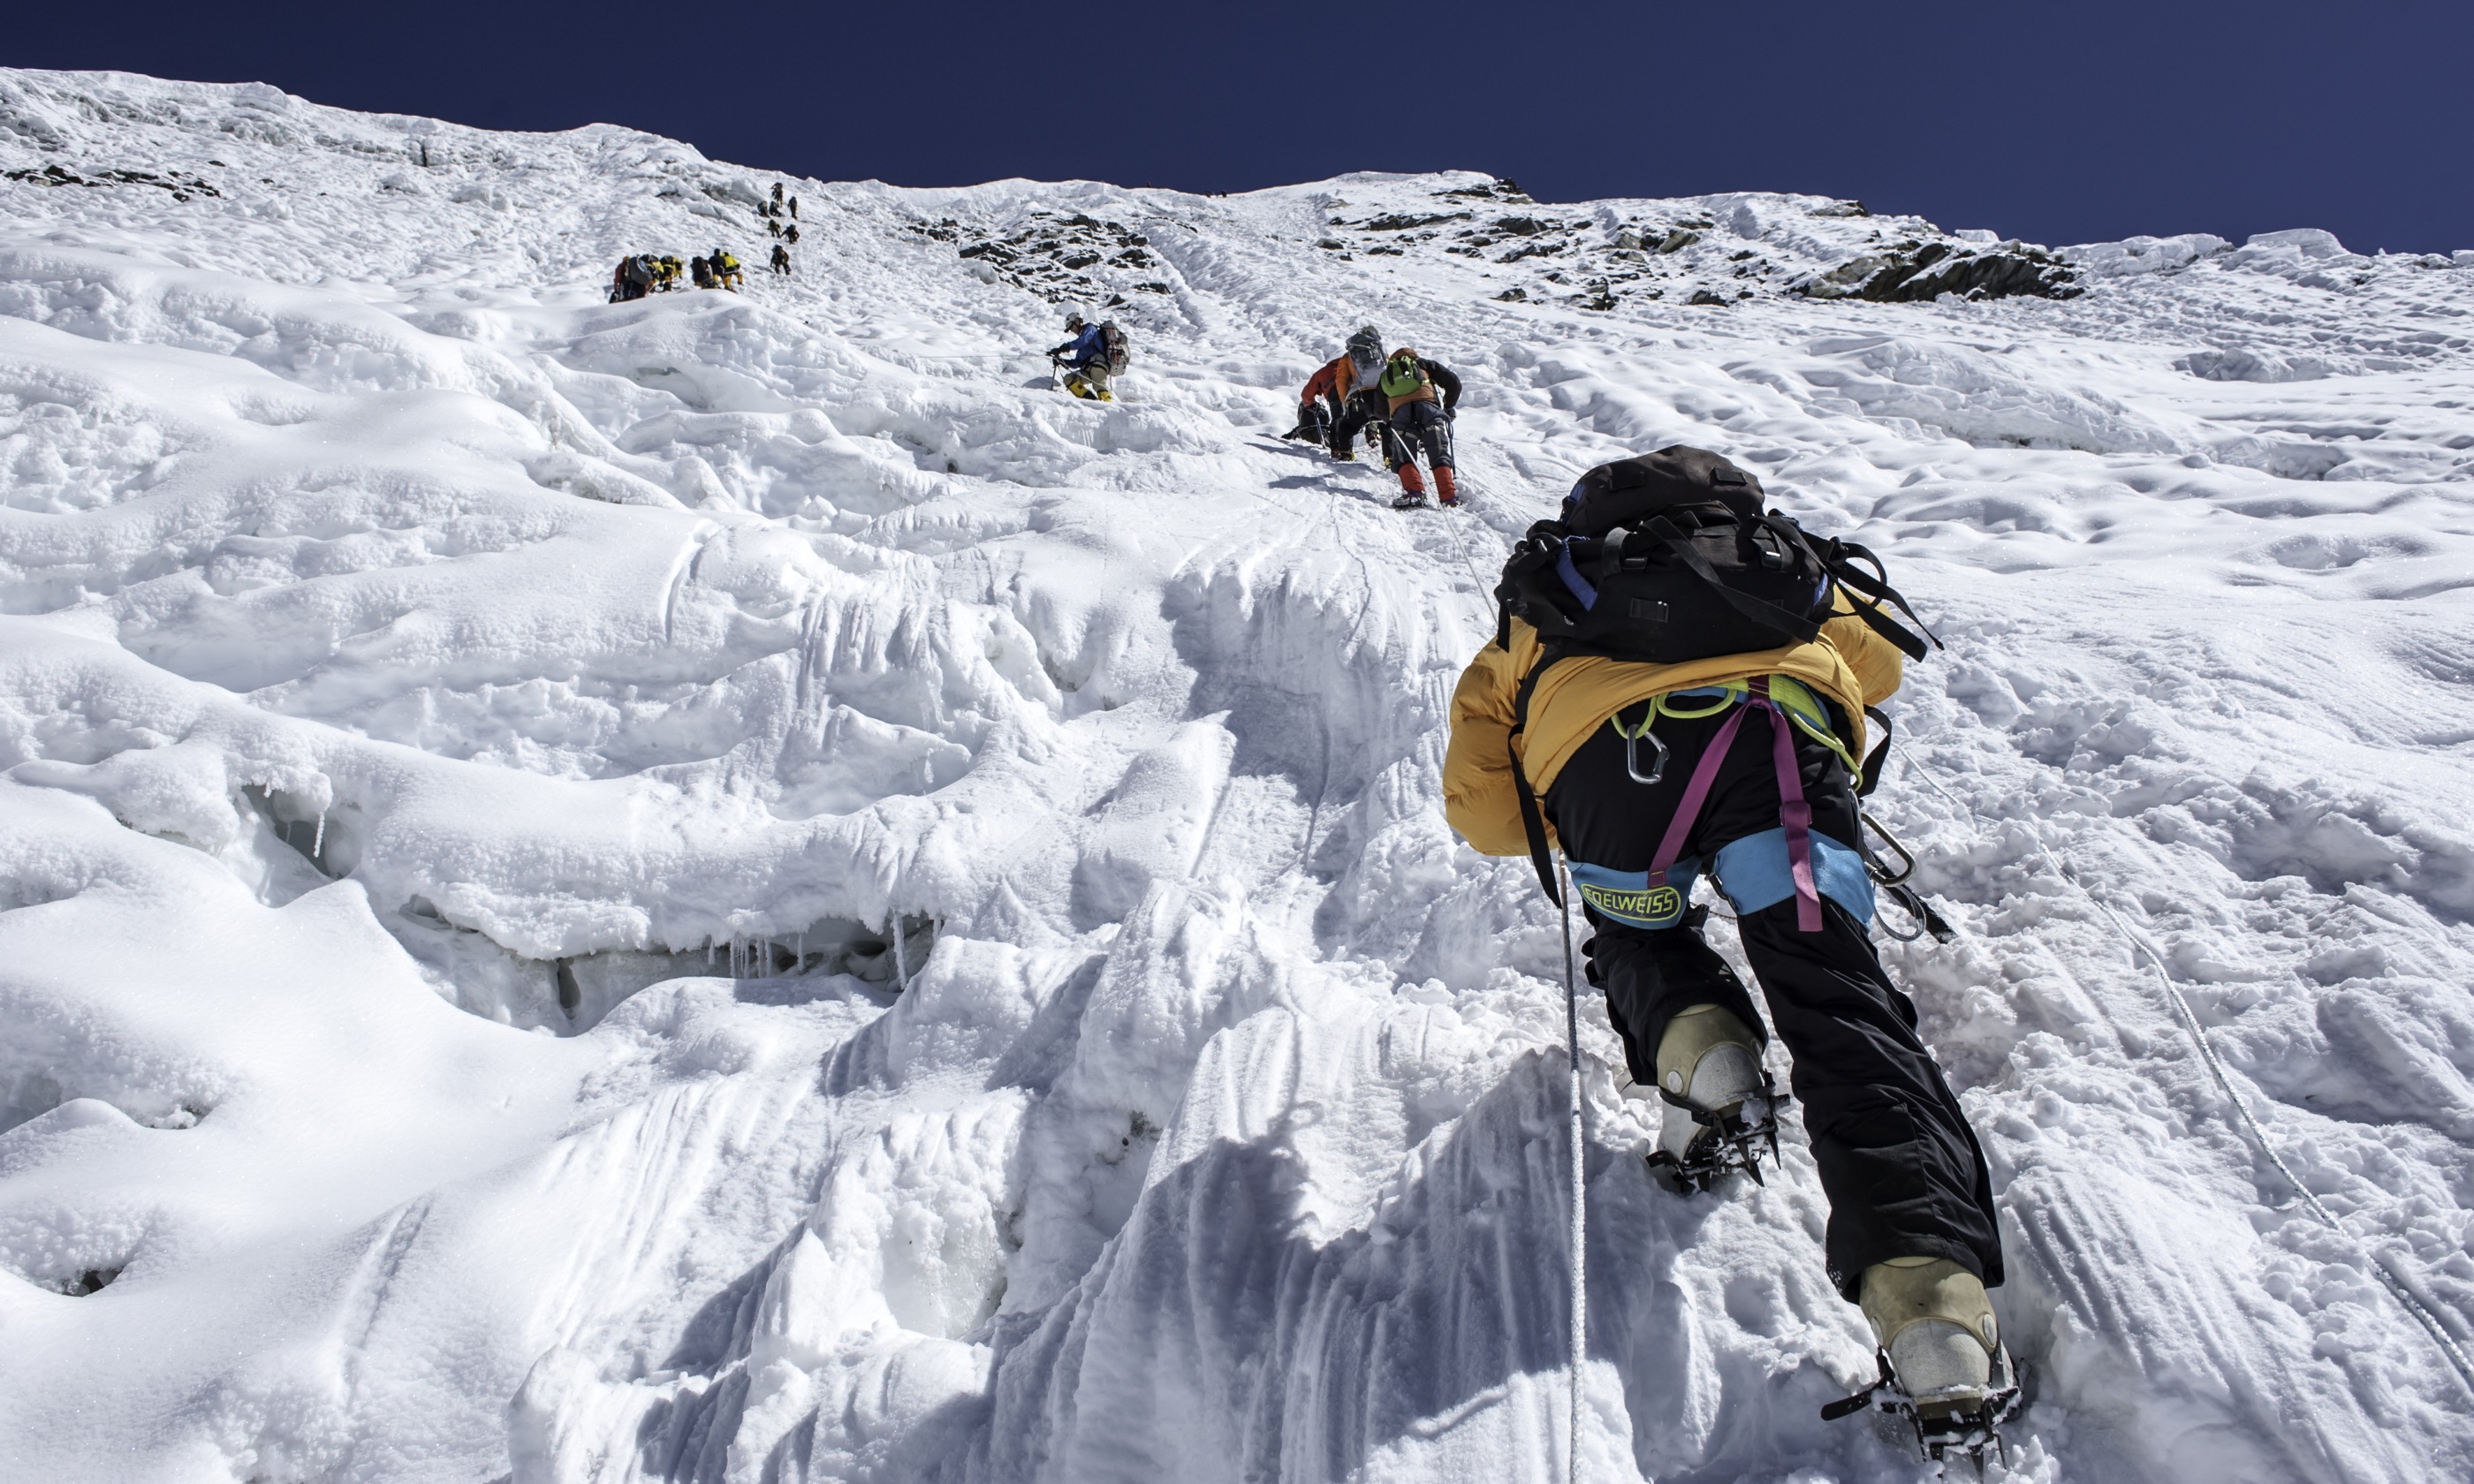 Climbing with ice pics (Shutterstock.com)